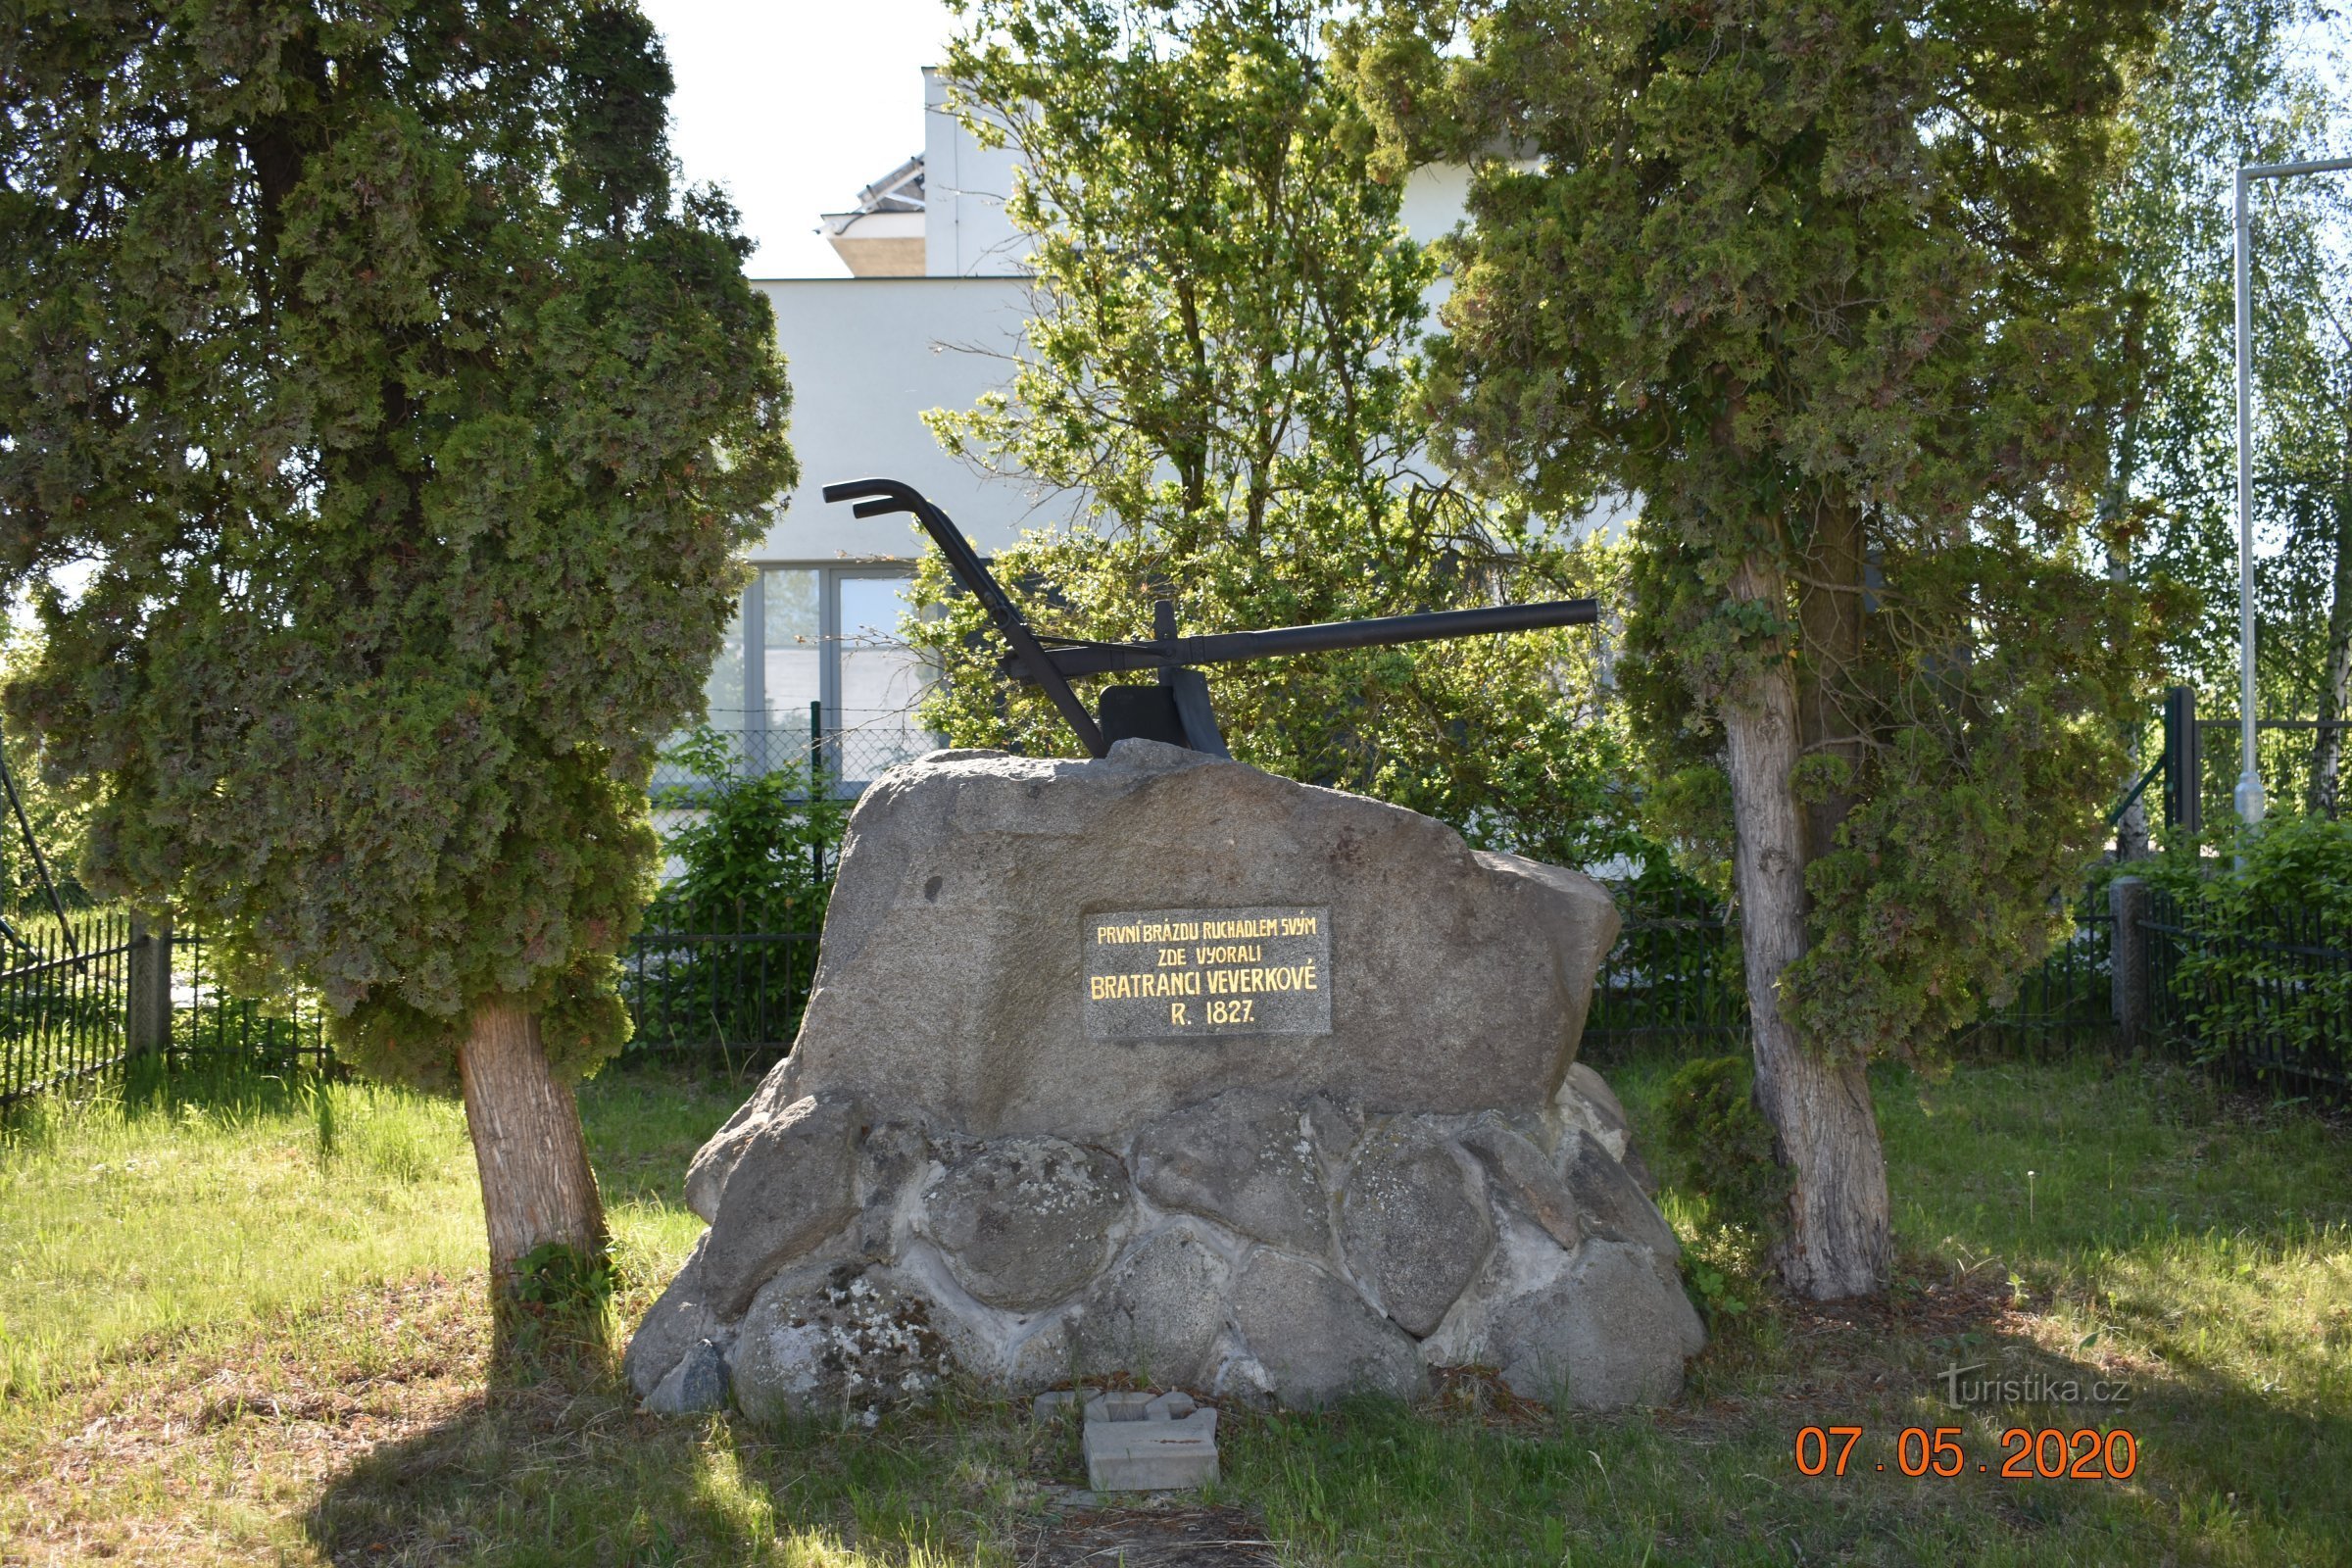 Spomenik neredu rođaka Veverk u Rybitvíju